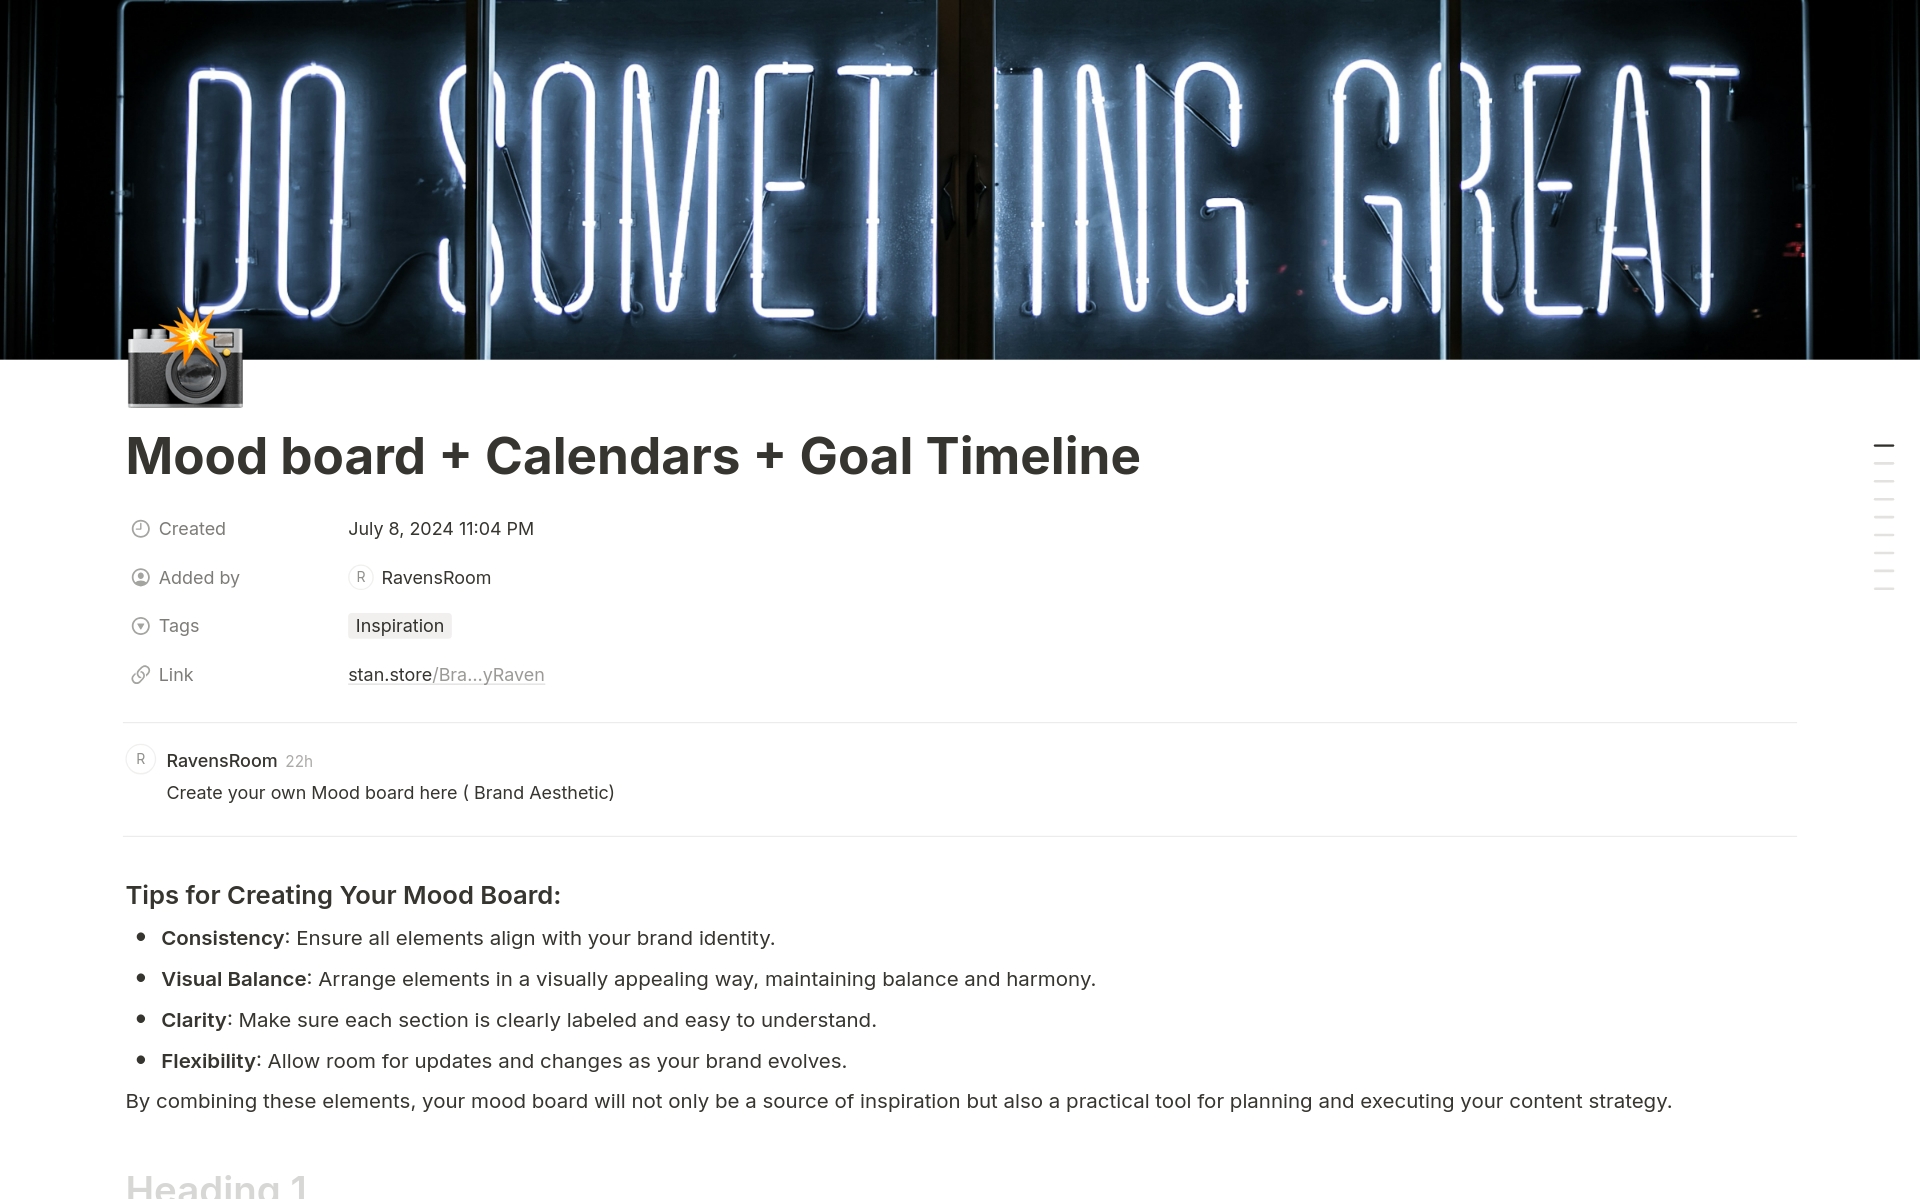 Content Calendar + Mood Board + Goal Timeline님의 템플릿 미리보기